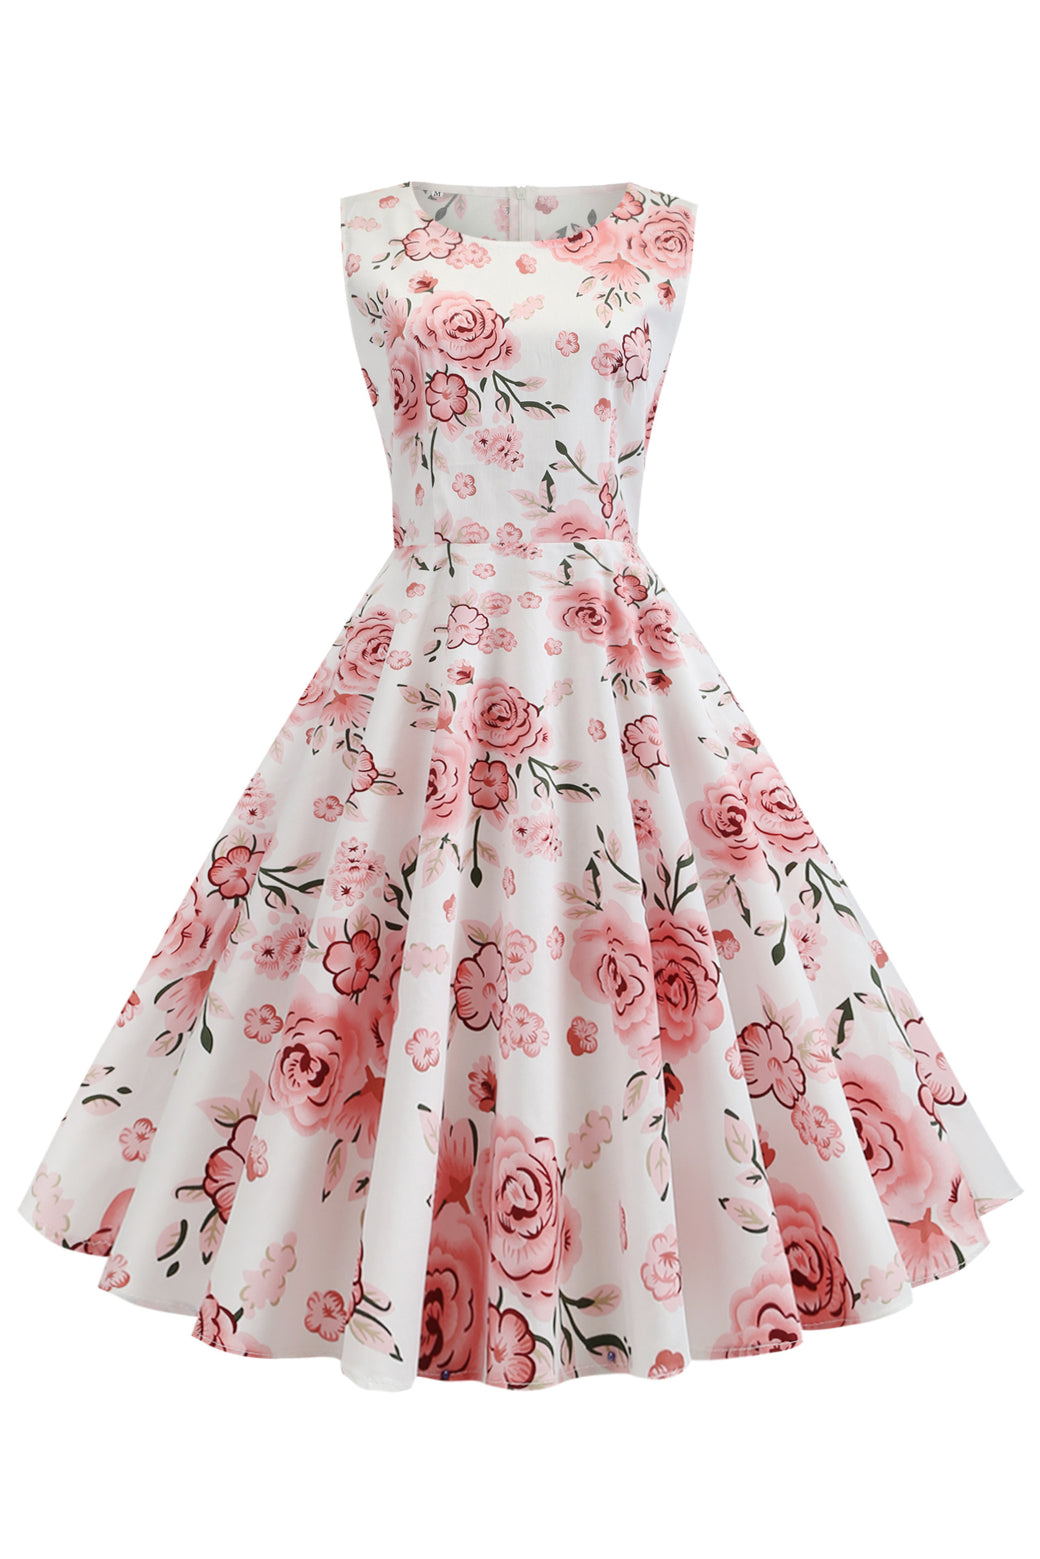 4 Styles Floral Sleeveless A-line Vintage Dress